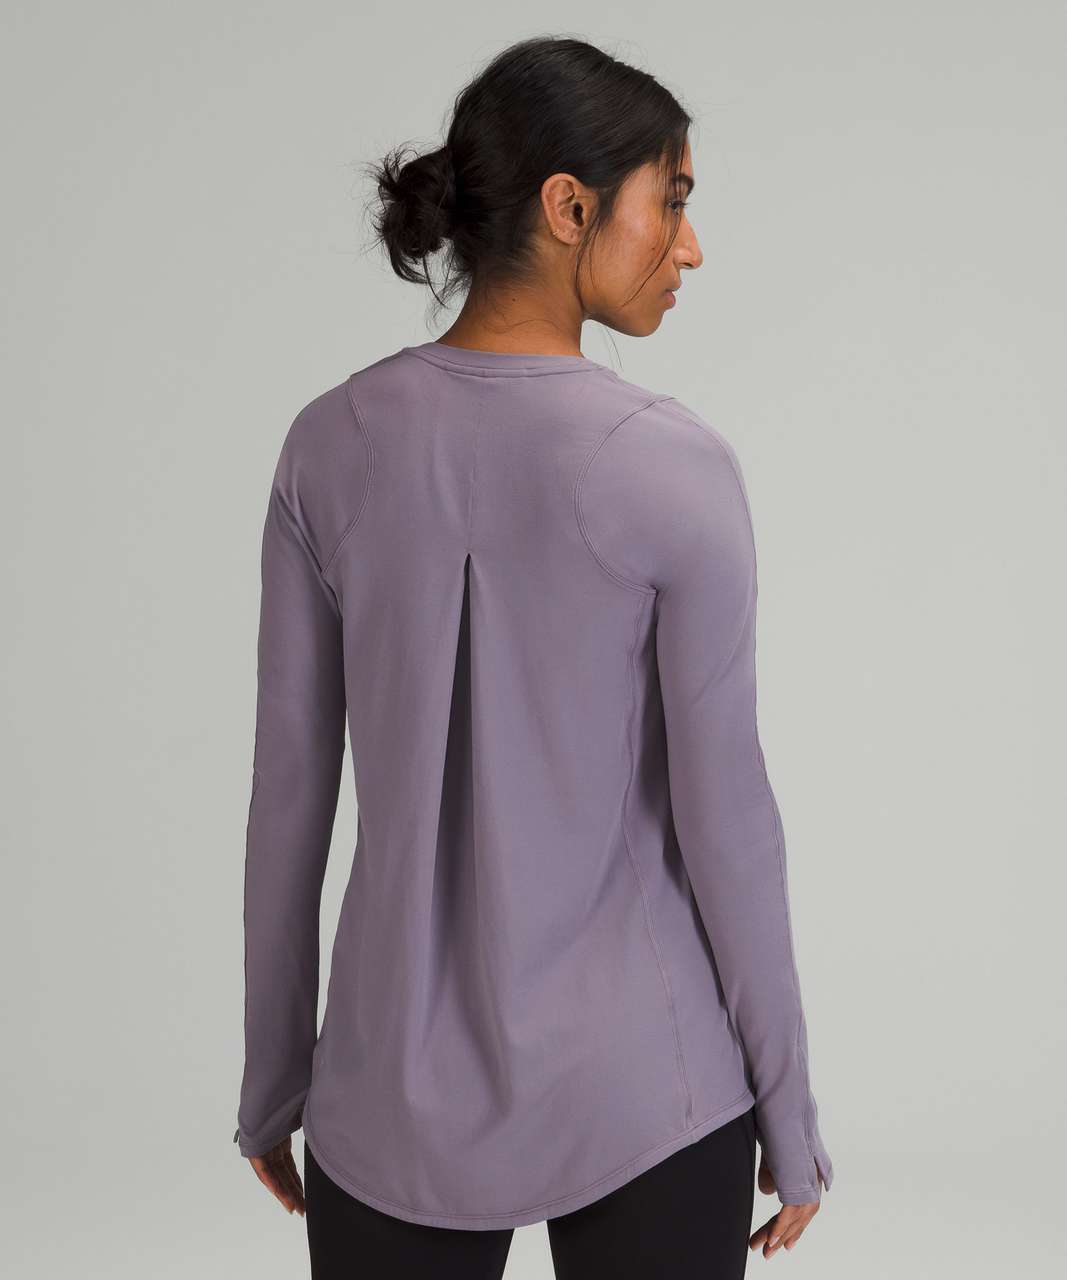 Lululemon Tuck and Flow Long Sleeve Shirt - Dusky Lavender - lulu